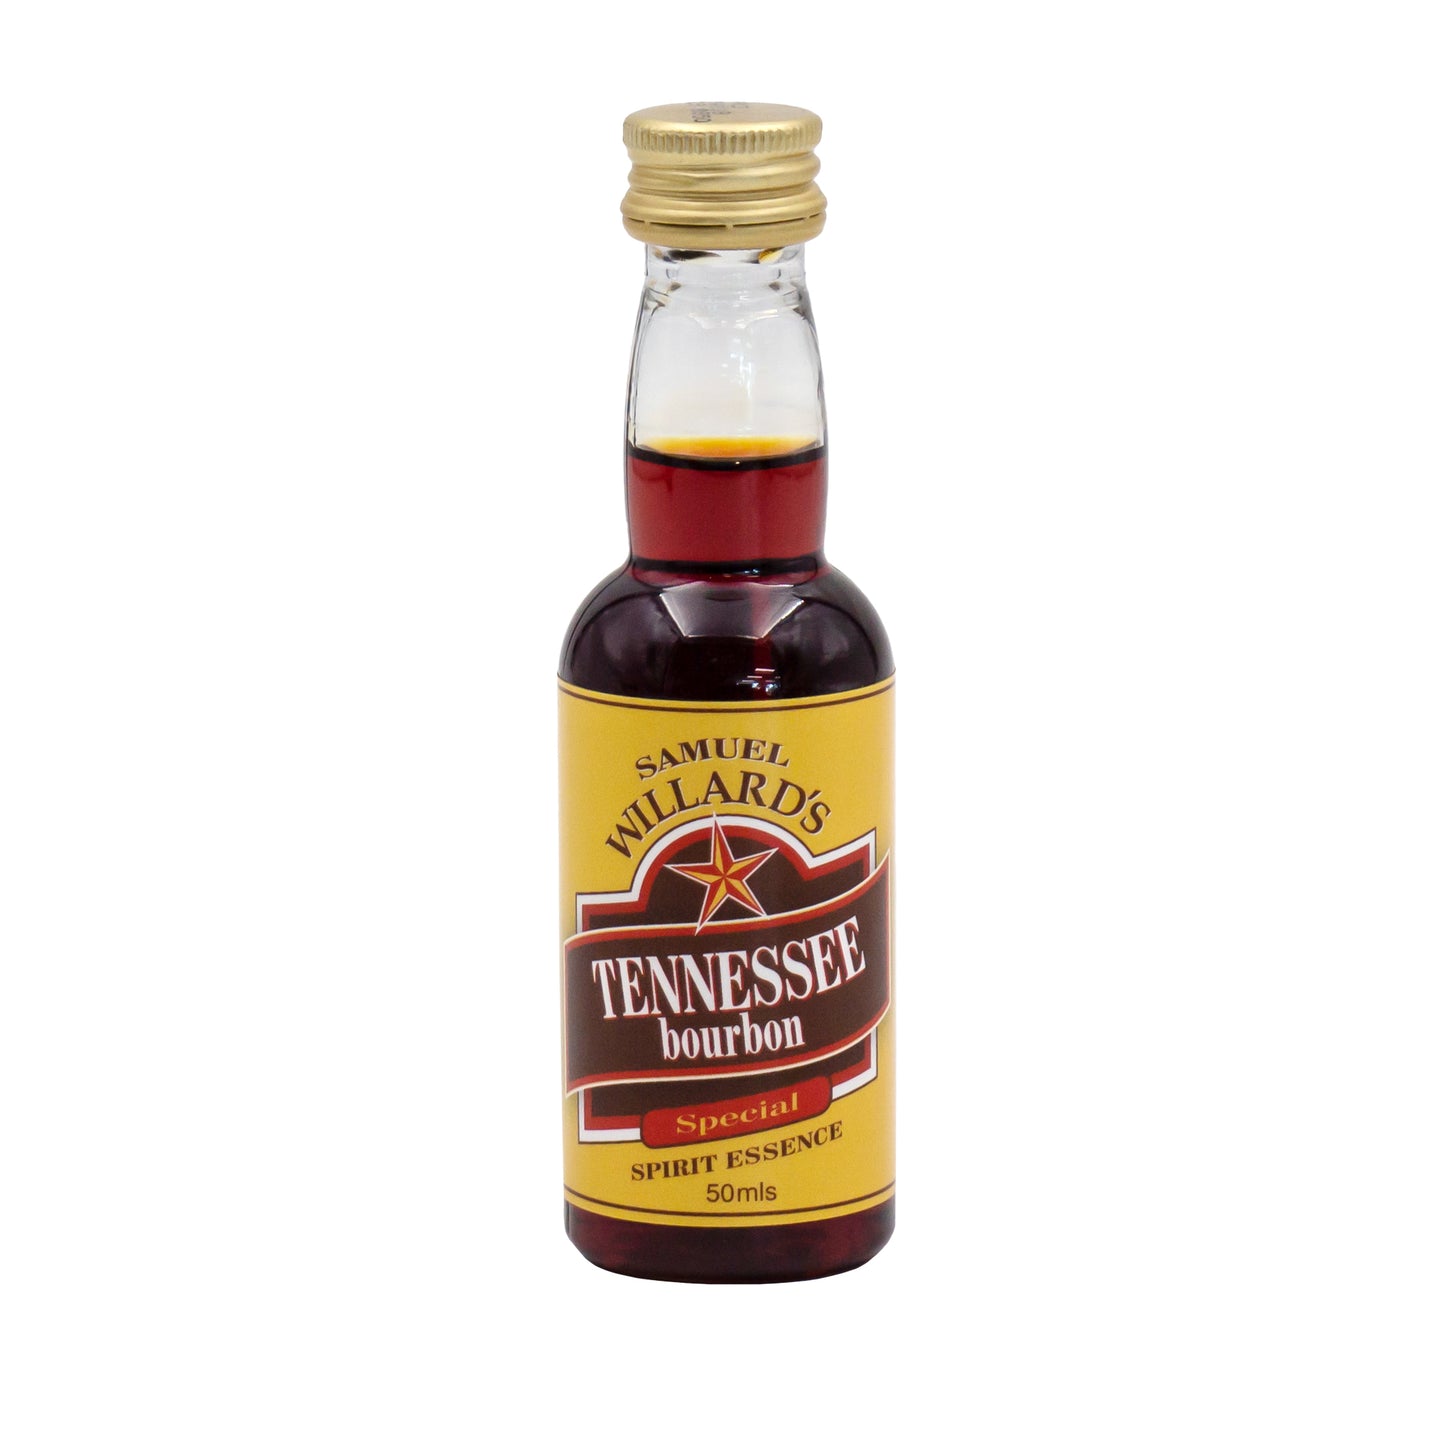 50ml  bottle of samuel willards tennessee bourbon essence